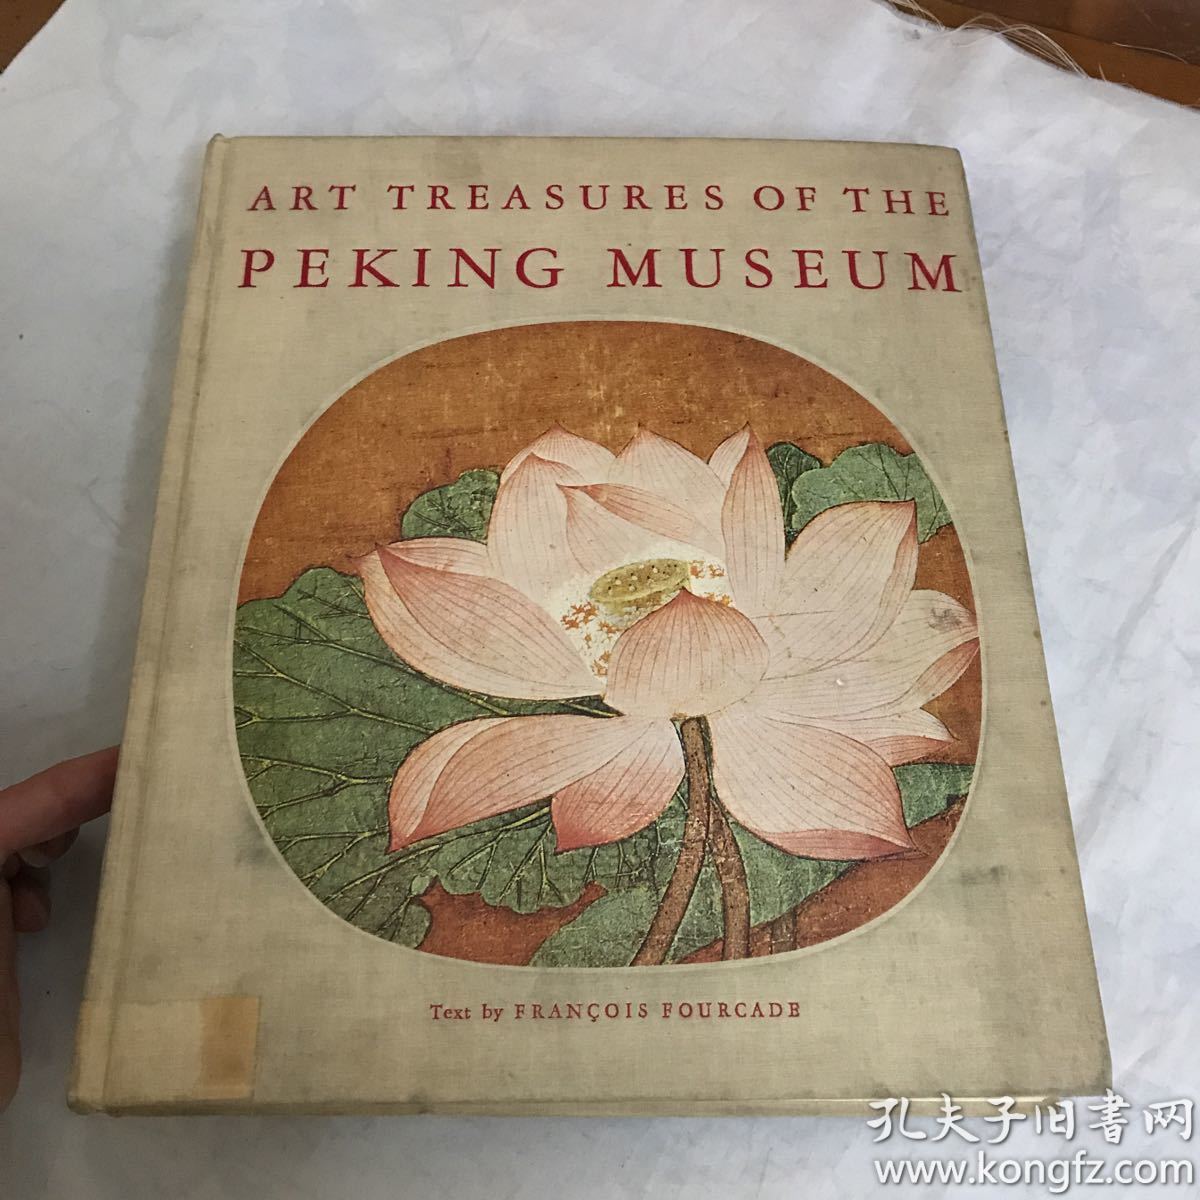 1965年英文版《北京故宫之艺术宝藏》（Art Treasures of the Peking Museum），布面精装，